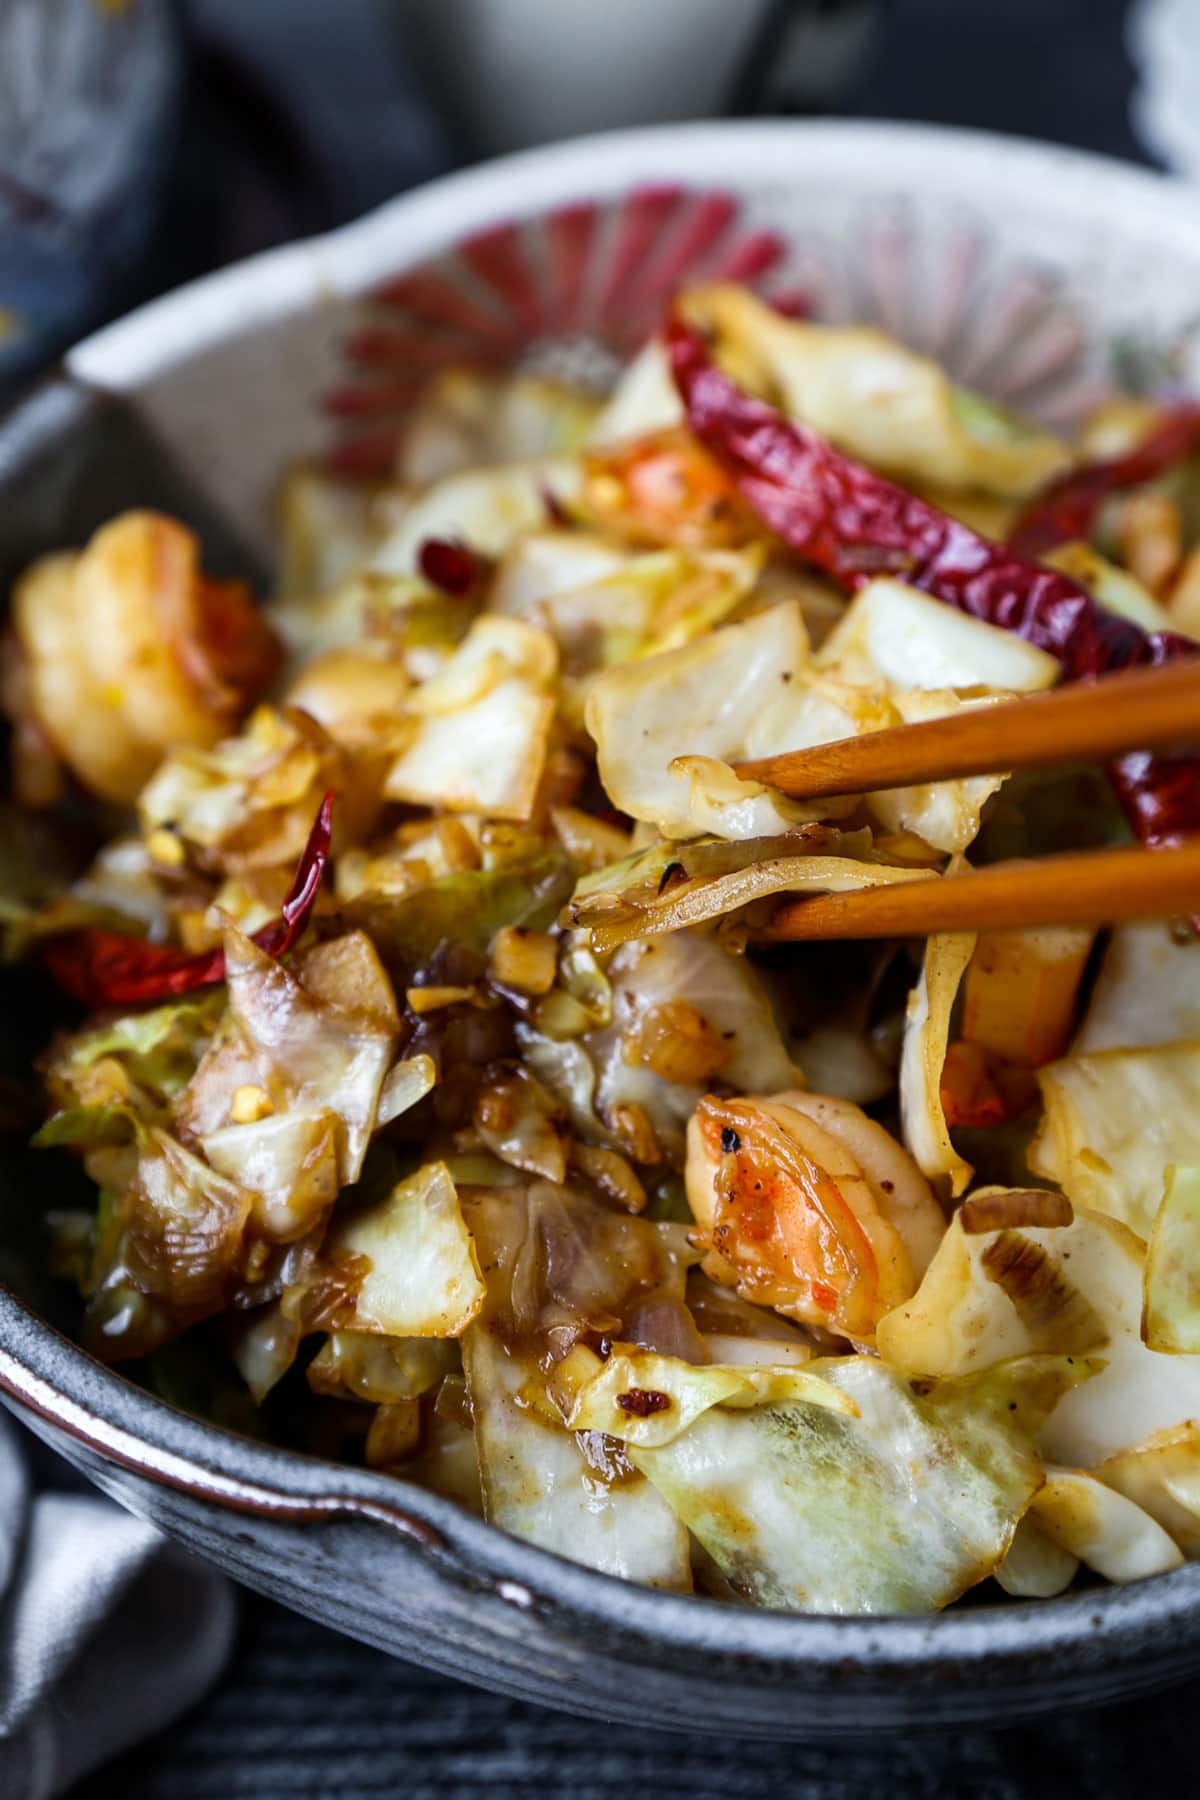 Cabbage stir fry with shrimp